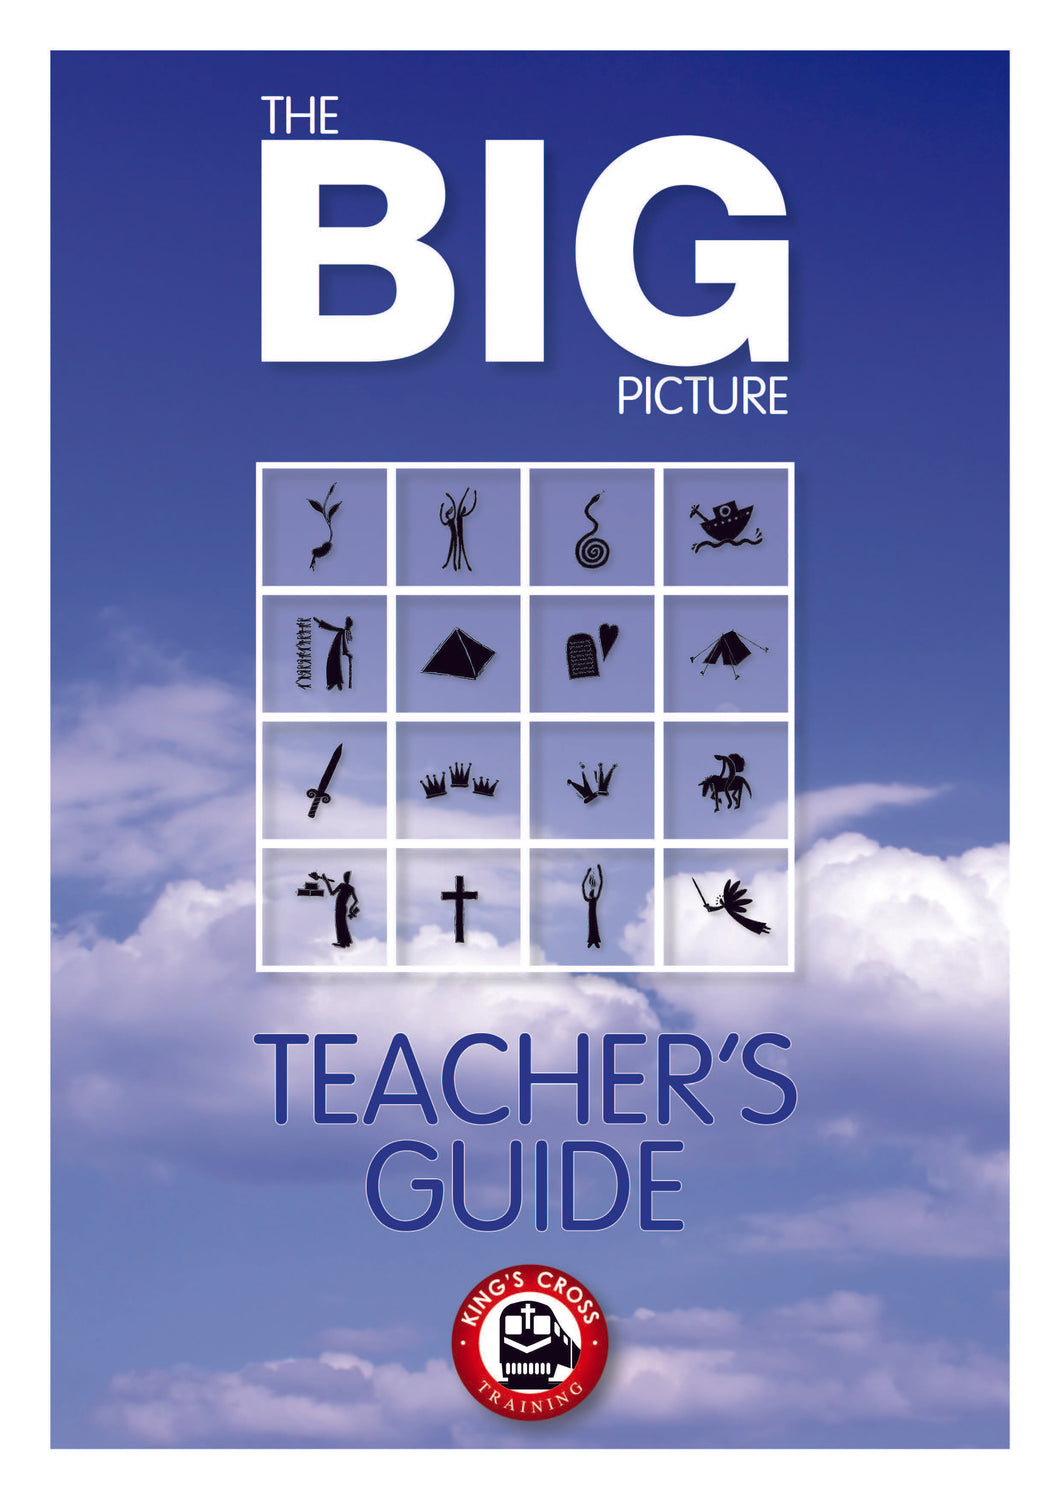 THE BIG PICTURE TEACHER'S GUIDE (Digital)